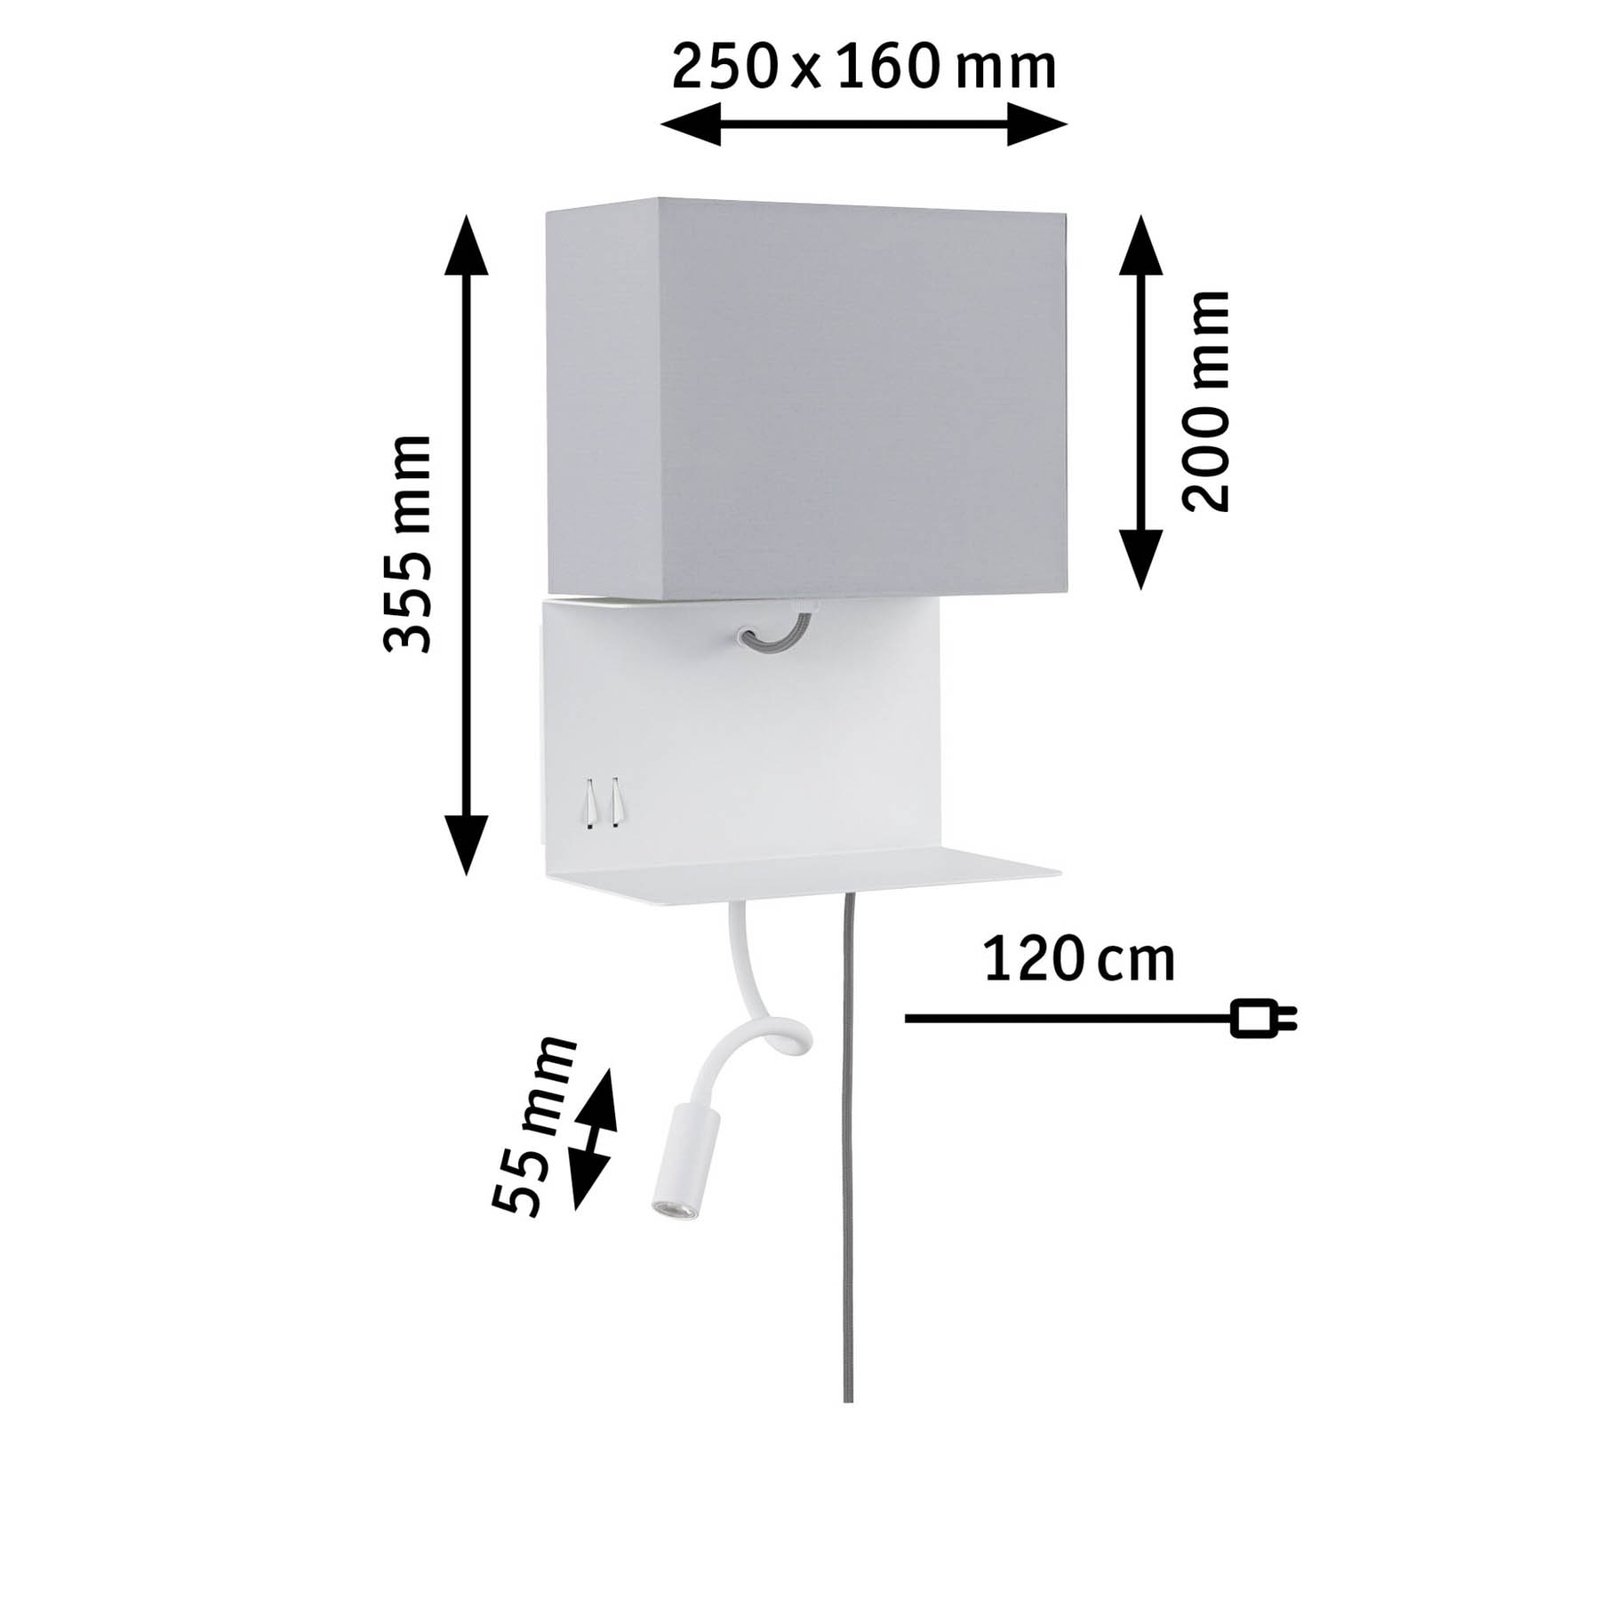 Paulmann Merani wall light, flexible arm and plug